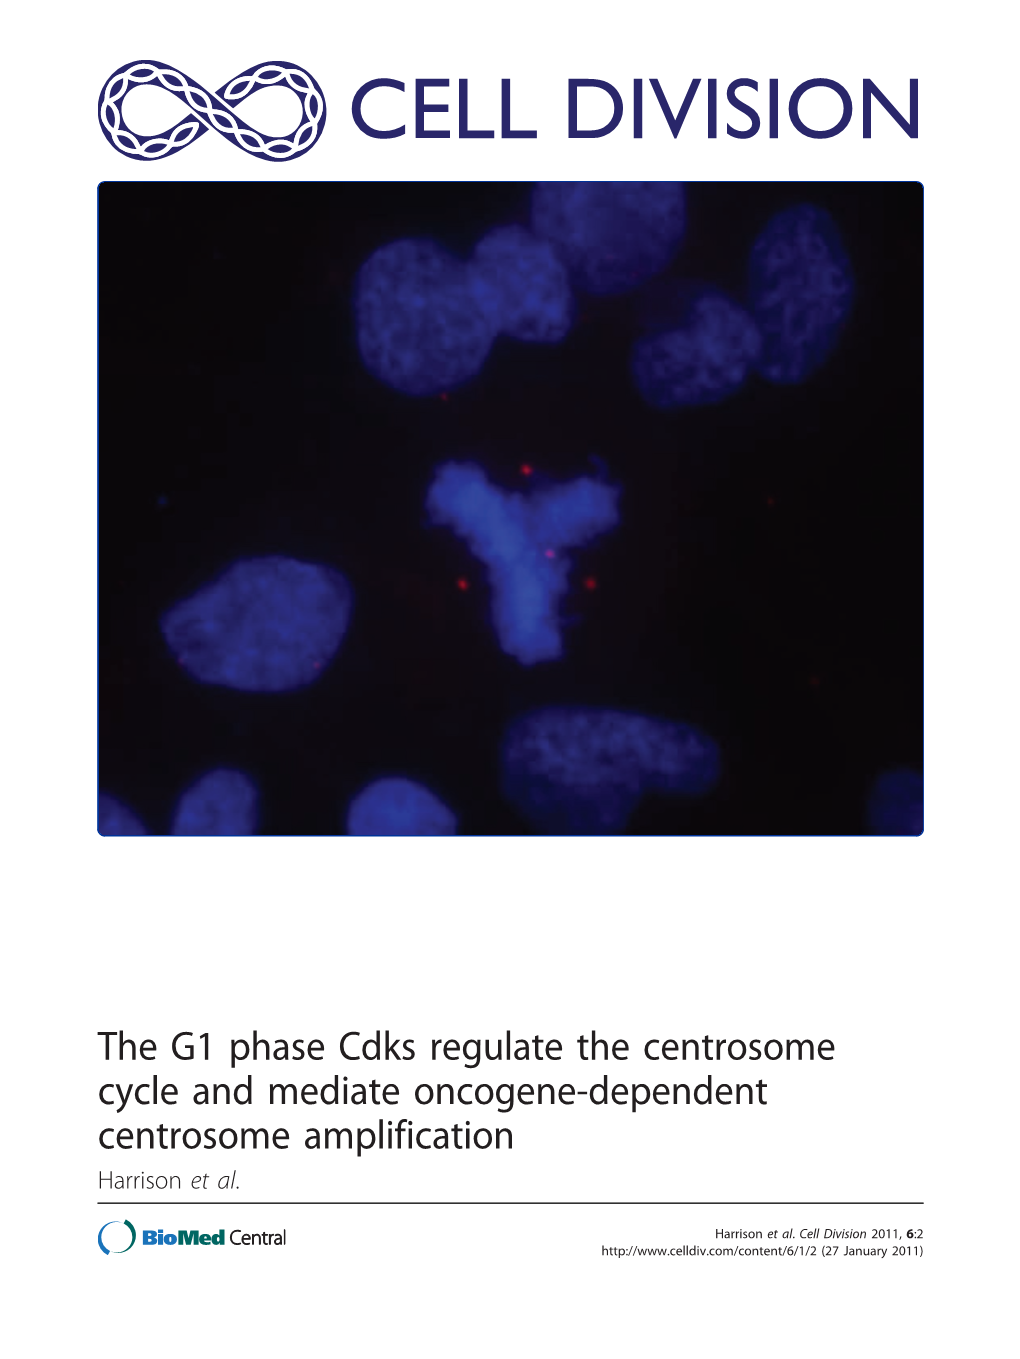 The G1 Phase Cdks Regulate the Centrosome Cycle and Mediate Oncogene-Dependent Centrosome Amplification Harrison Et Al